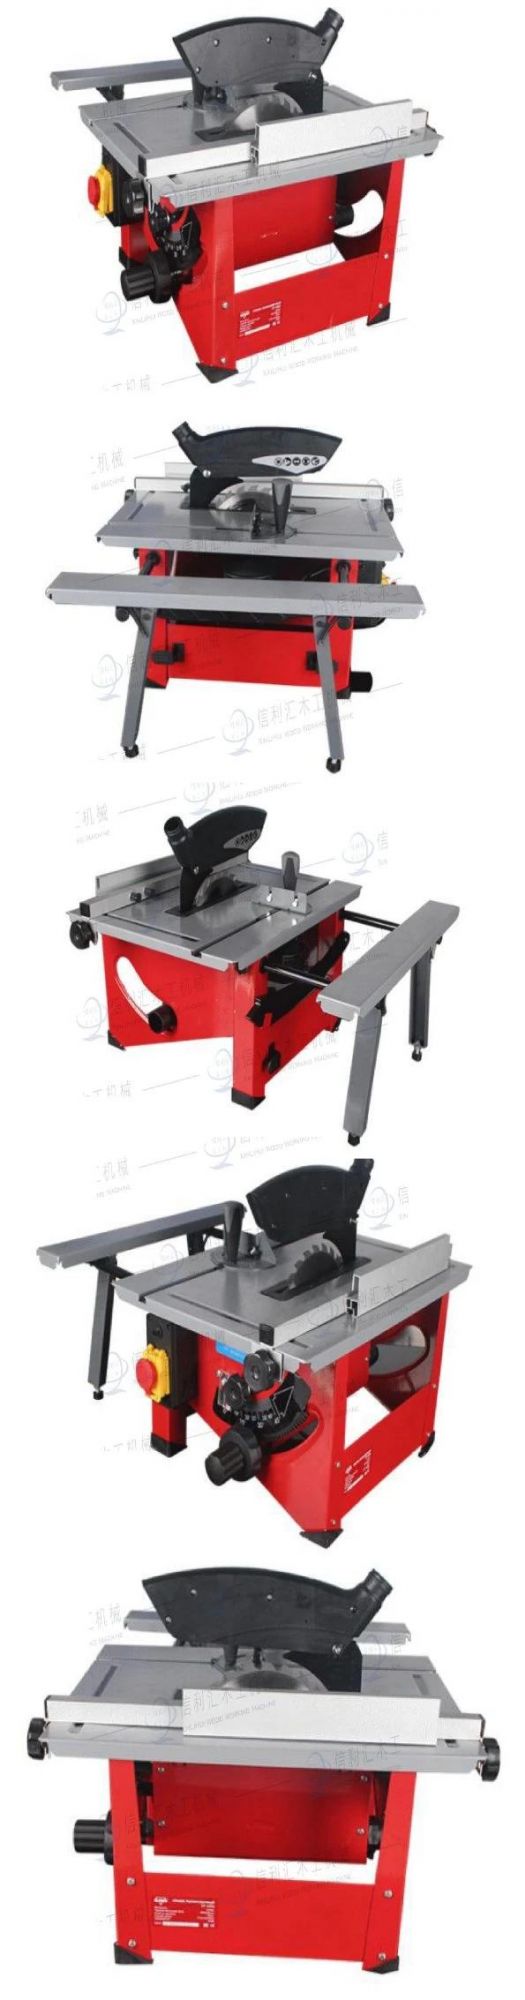 Min Table Saw /Multi Wood Saw Mini Multi Function Table Saw Circle Table Saw Machines De Borde Carpintaria Bench Table Saw